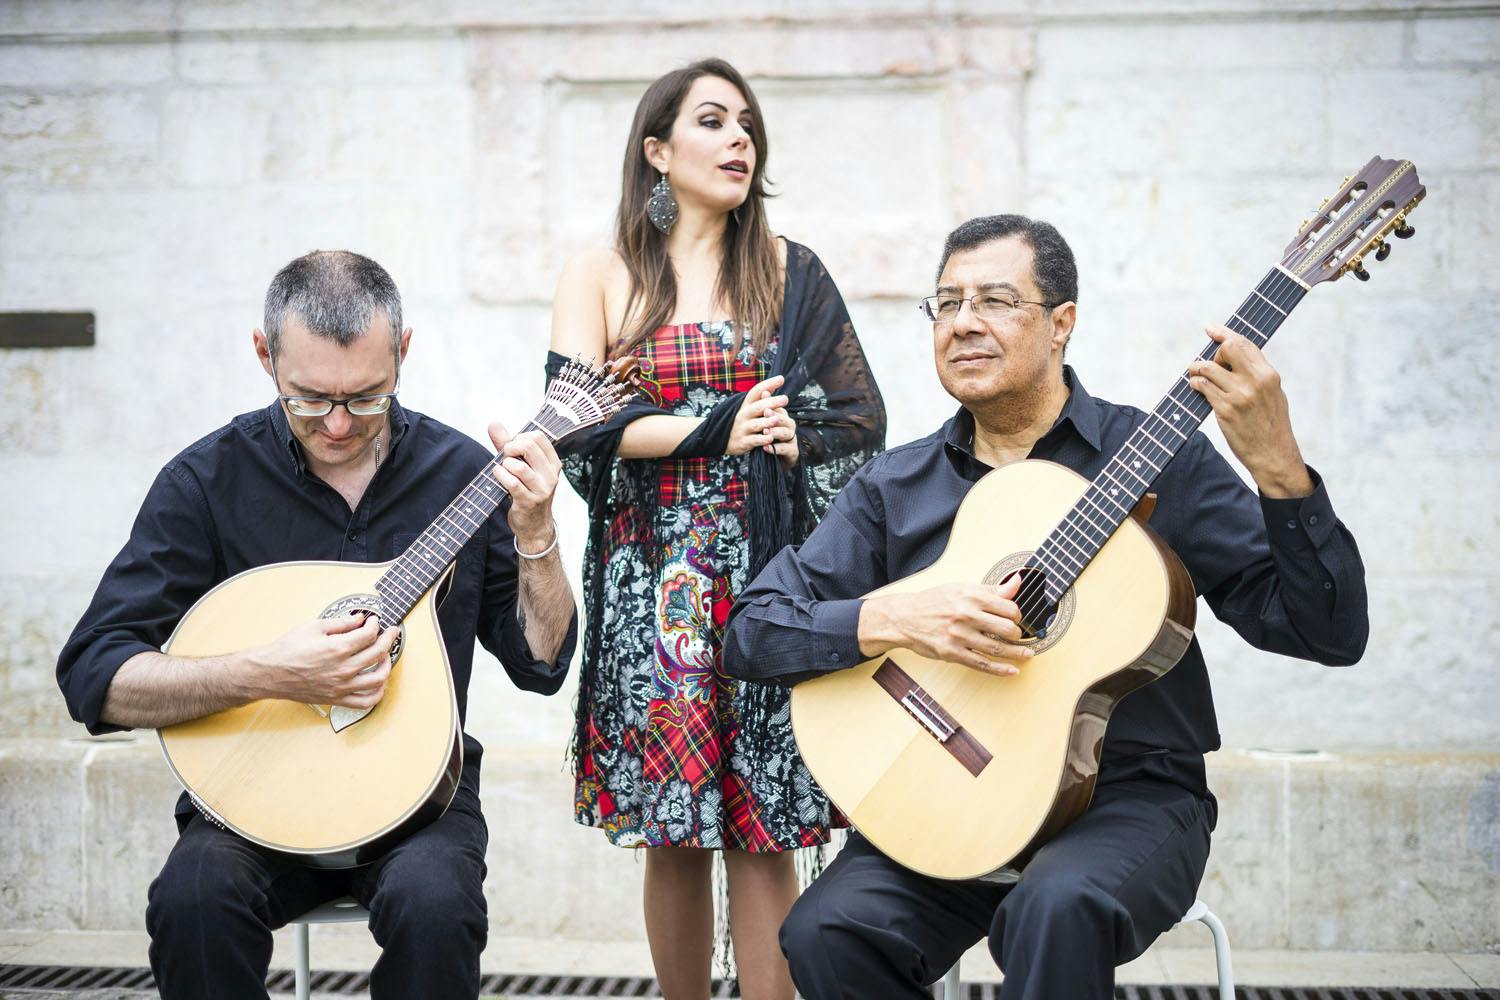 Fado Band - Performing traditional Portuguese music